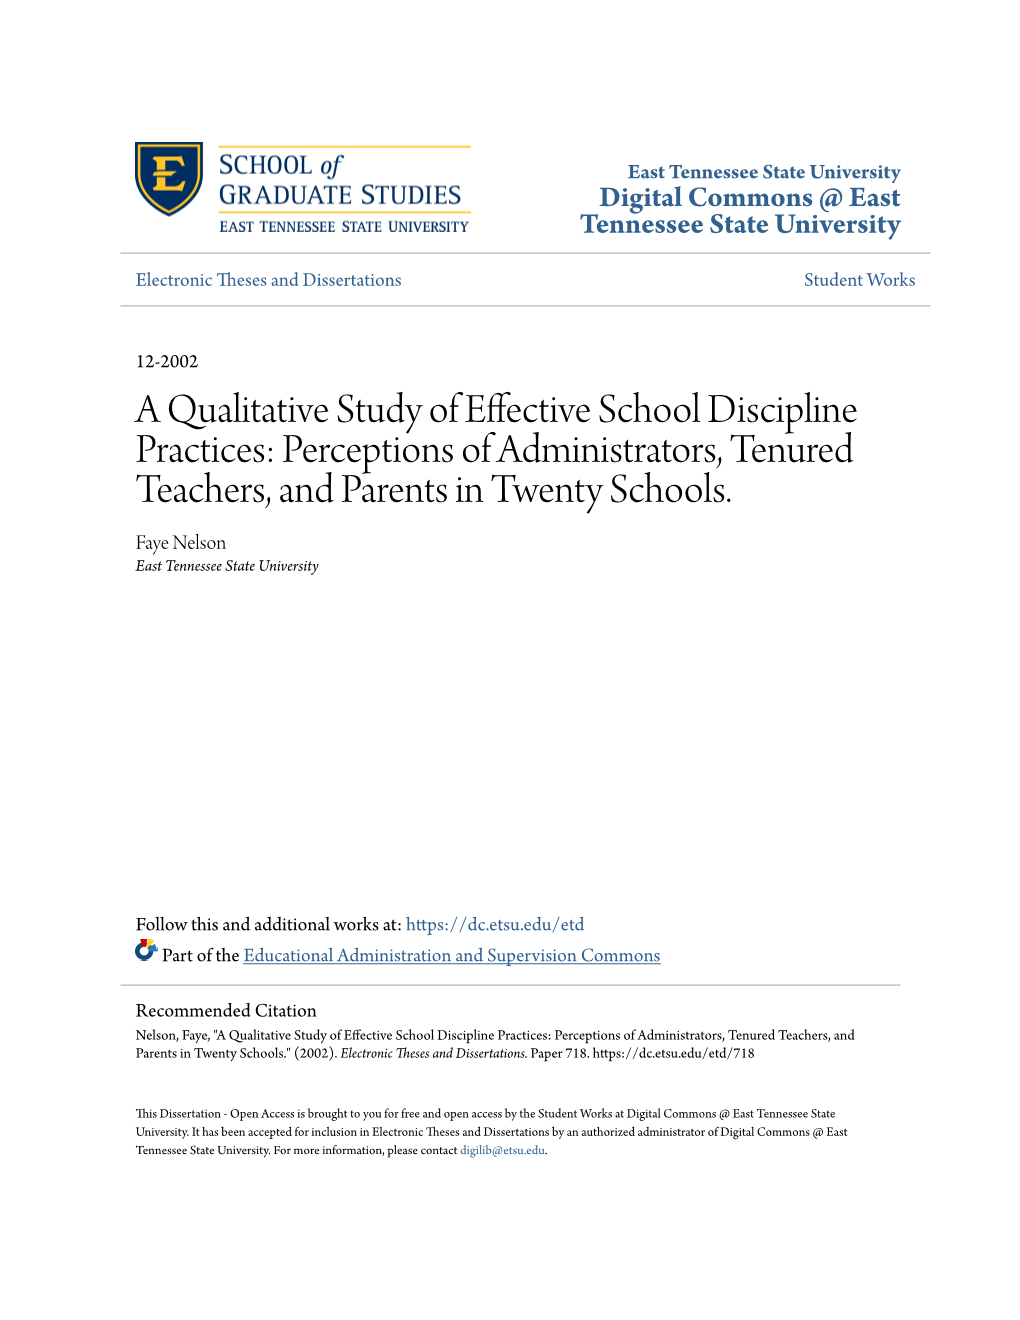 A Qualitative Study of Effective School Discipline Practices: Perceptions of Administrators, Tenured Teachers, and Parents in Twenty Schools